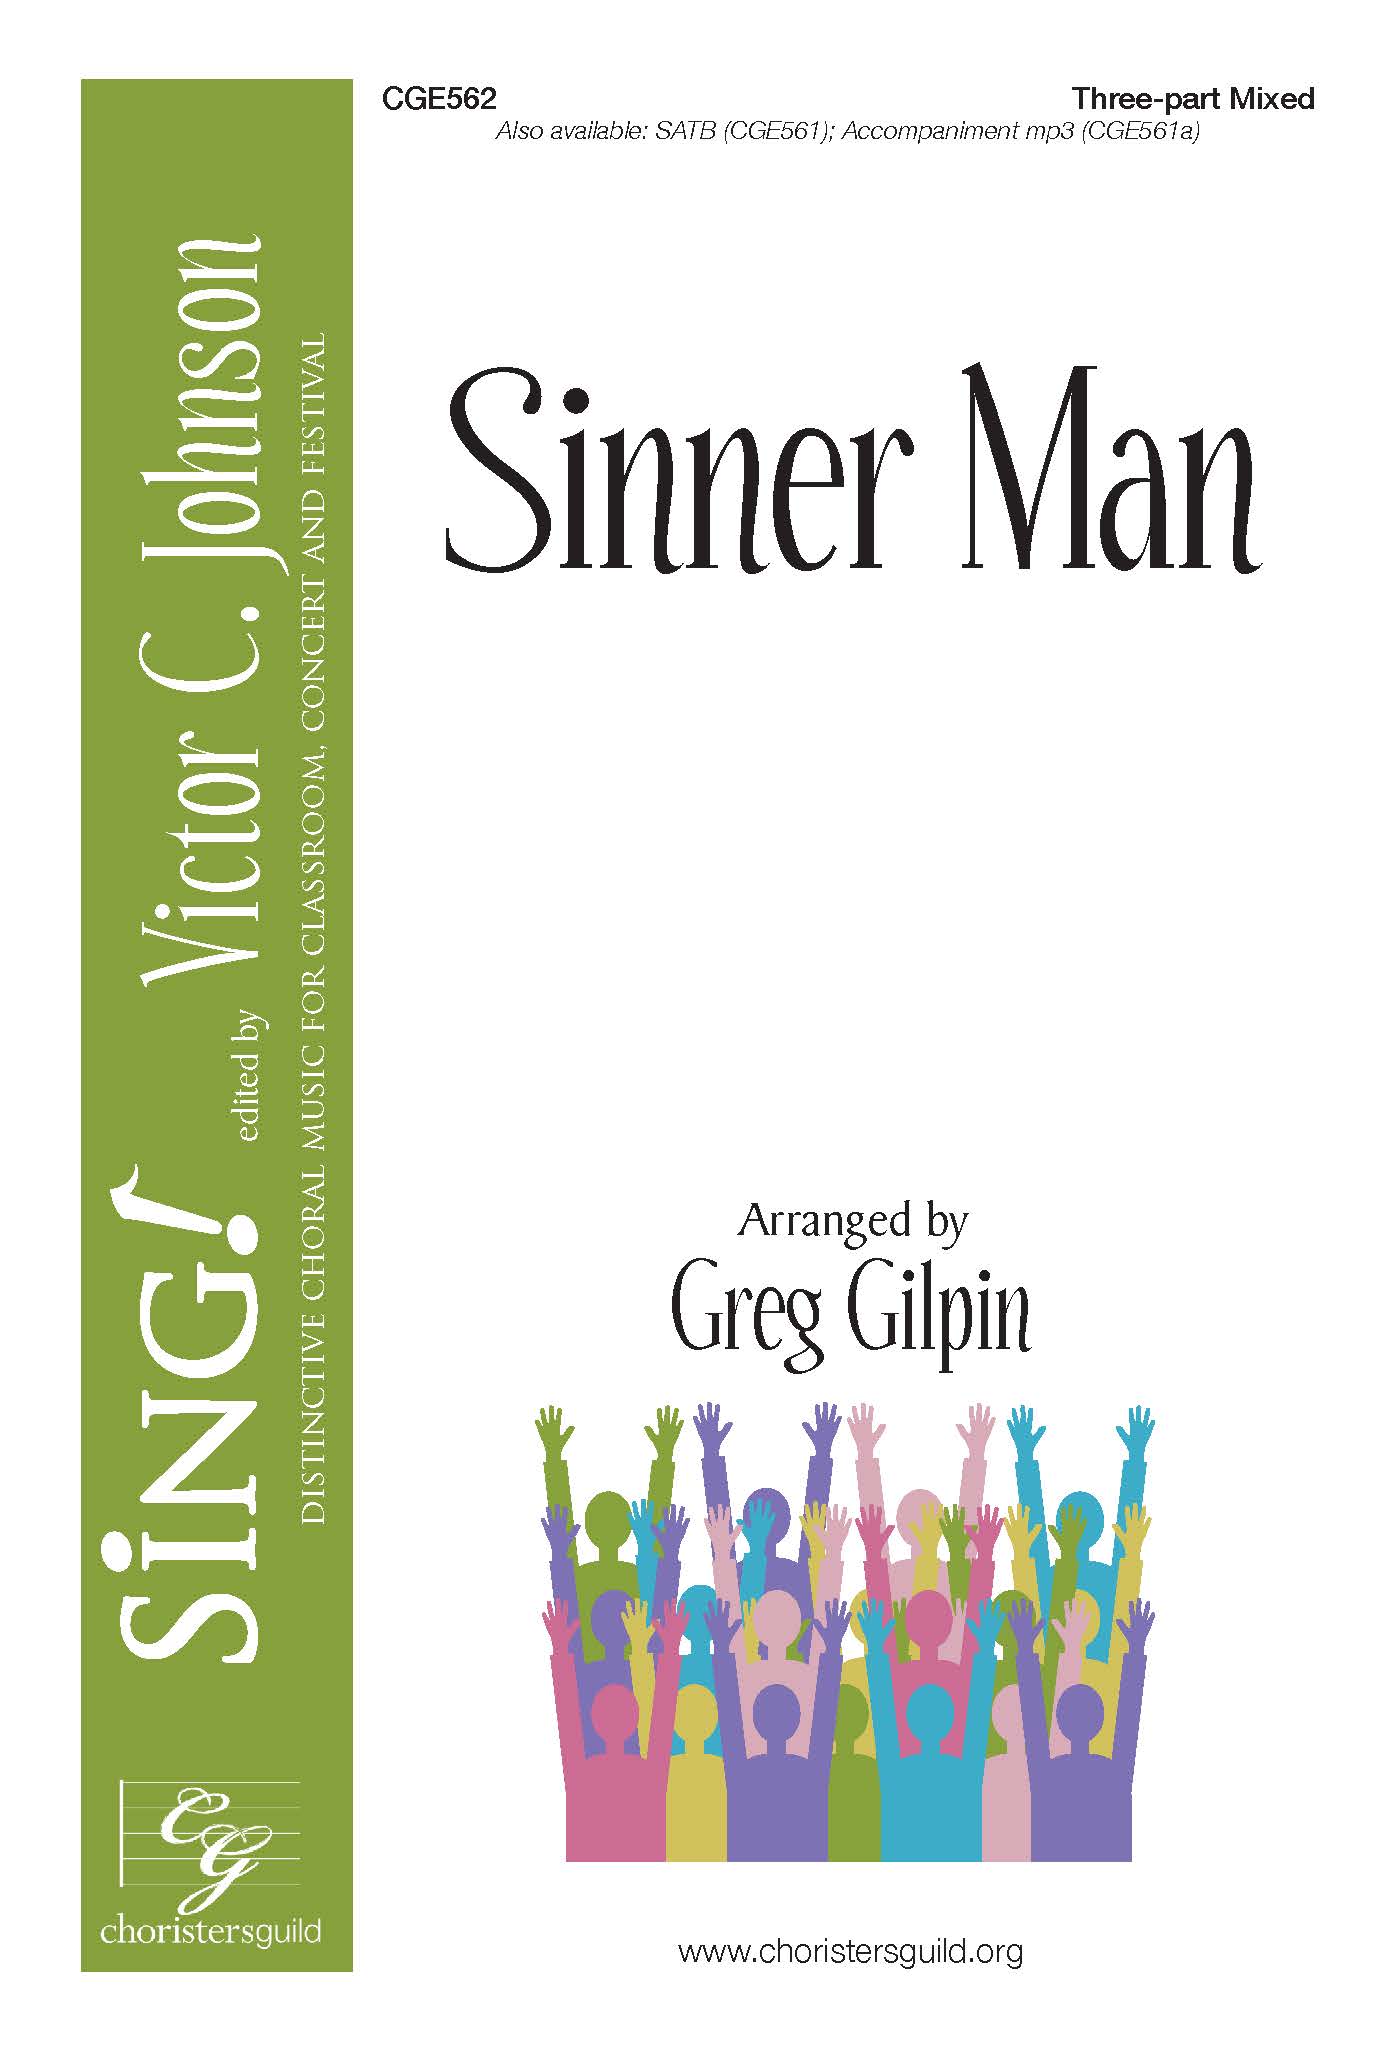 Sinner Man- Three-part Mixed